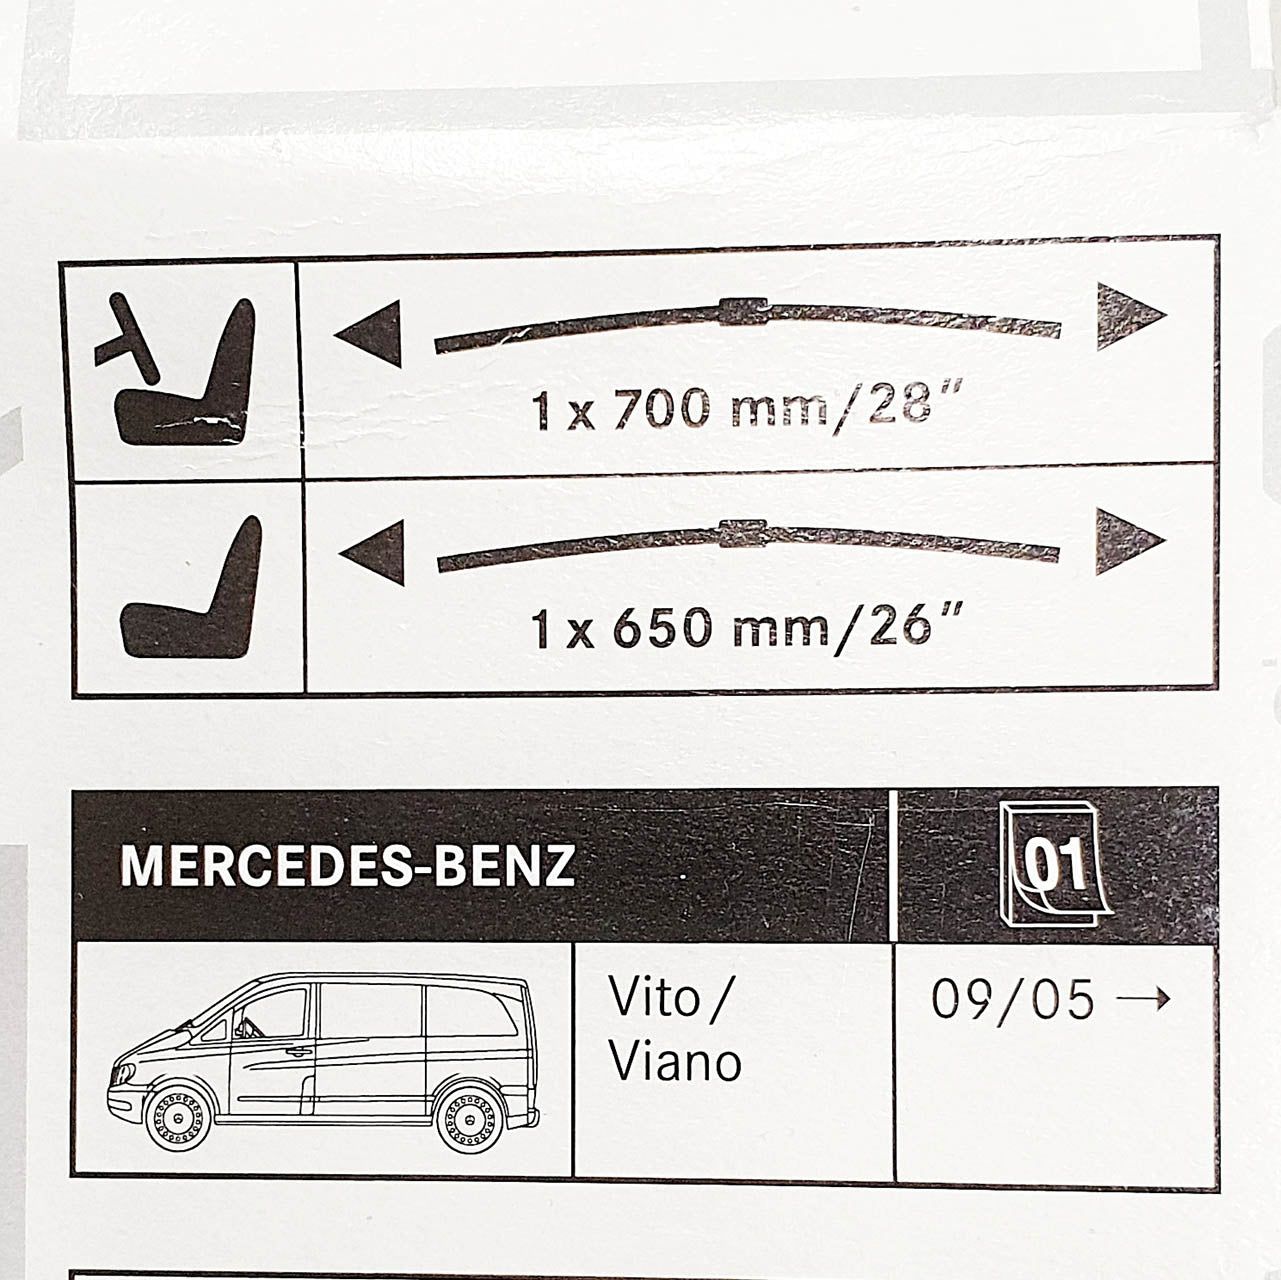 Genuine Mercedes-Benz Vito, Viano Front Wiper Blades for 447 models